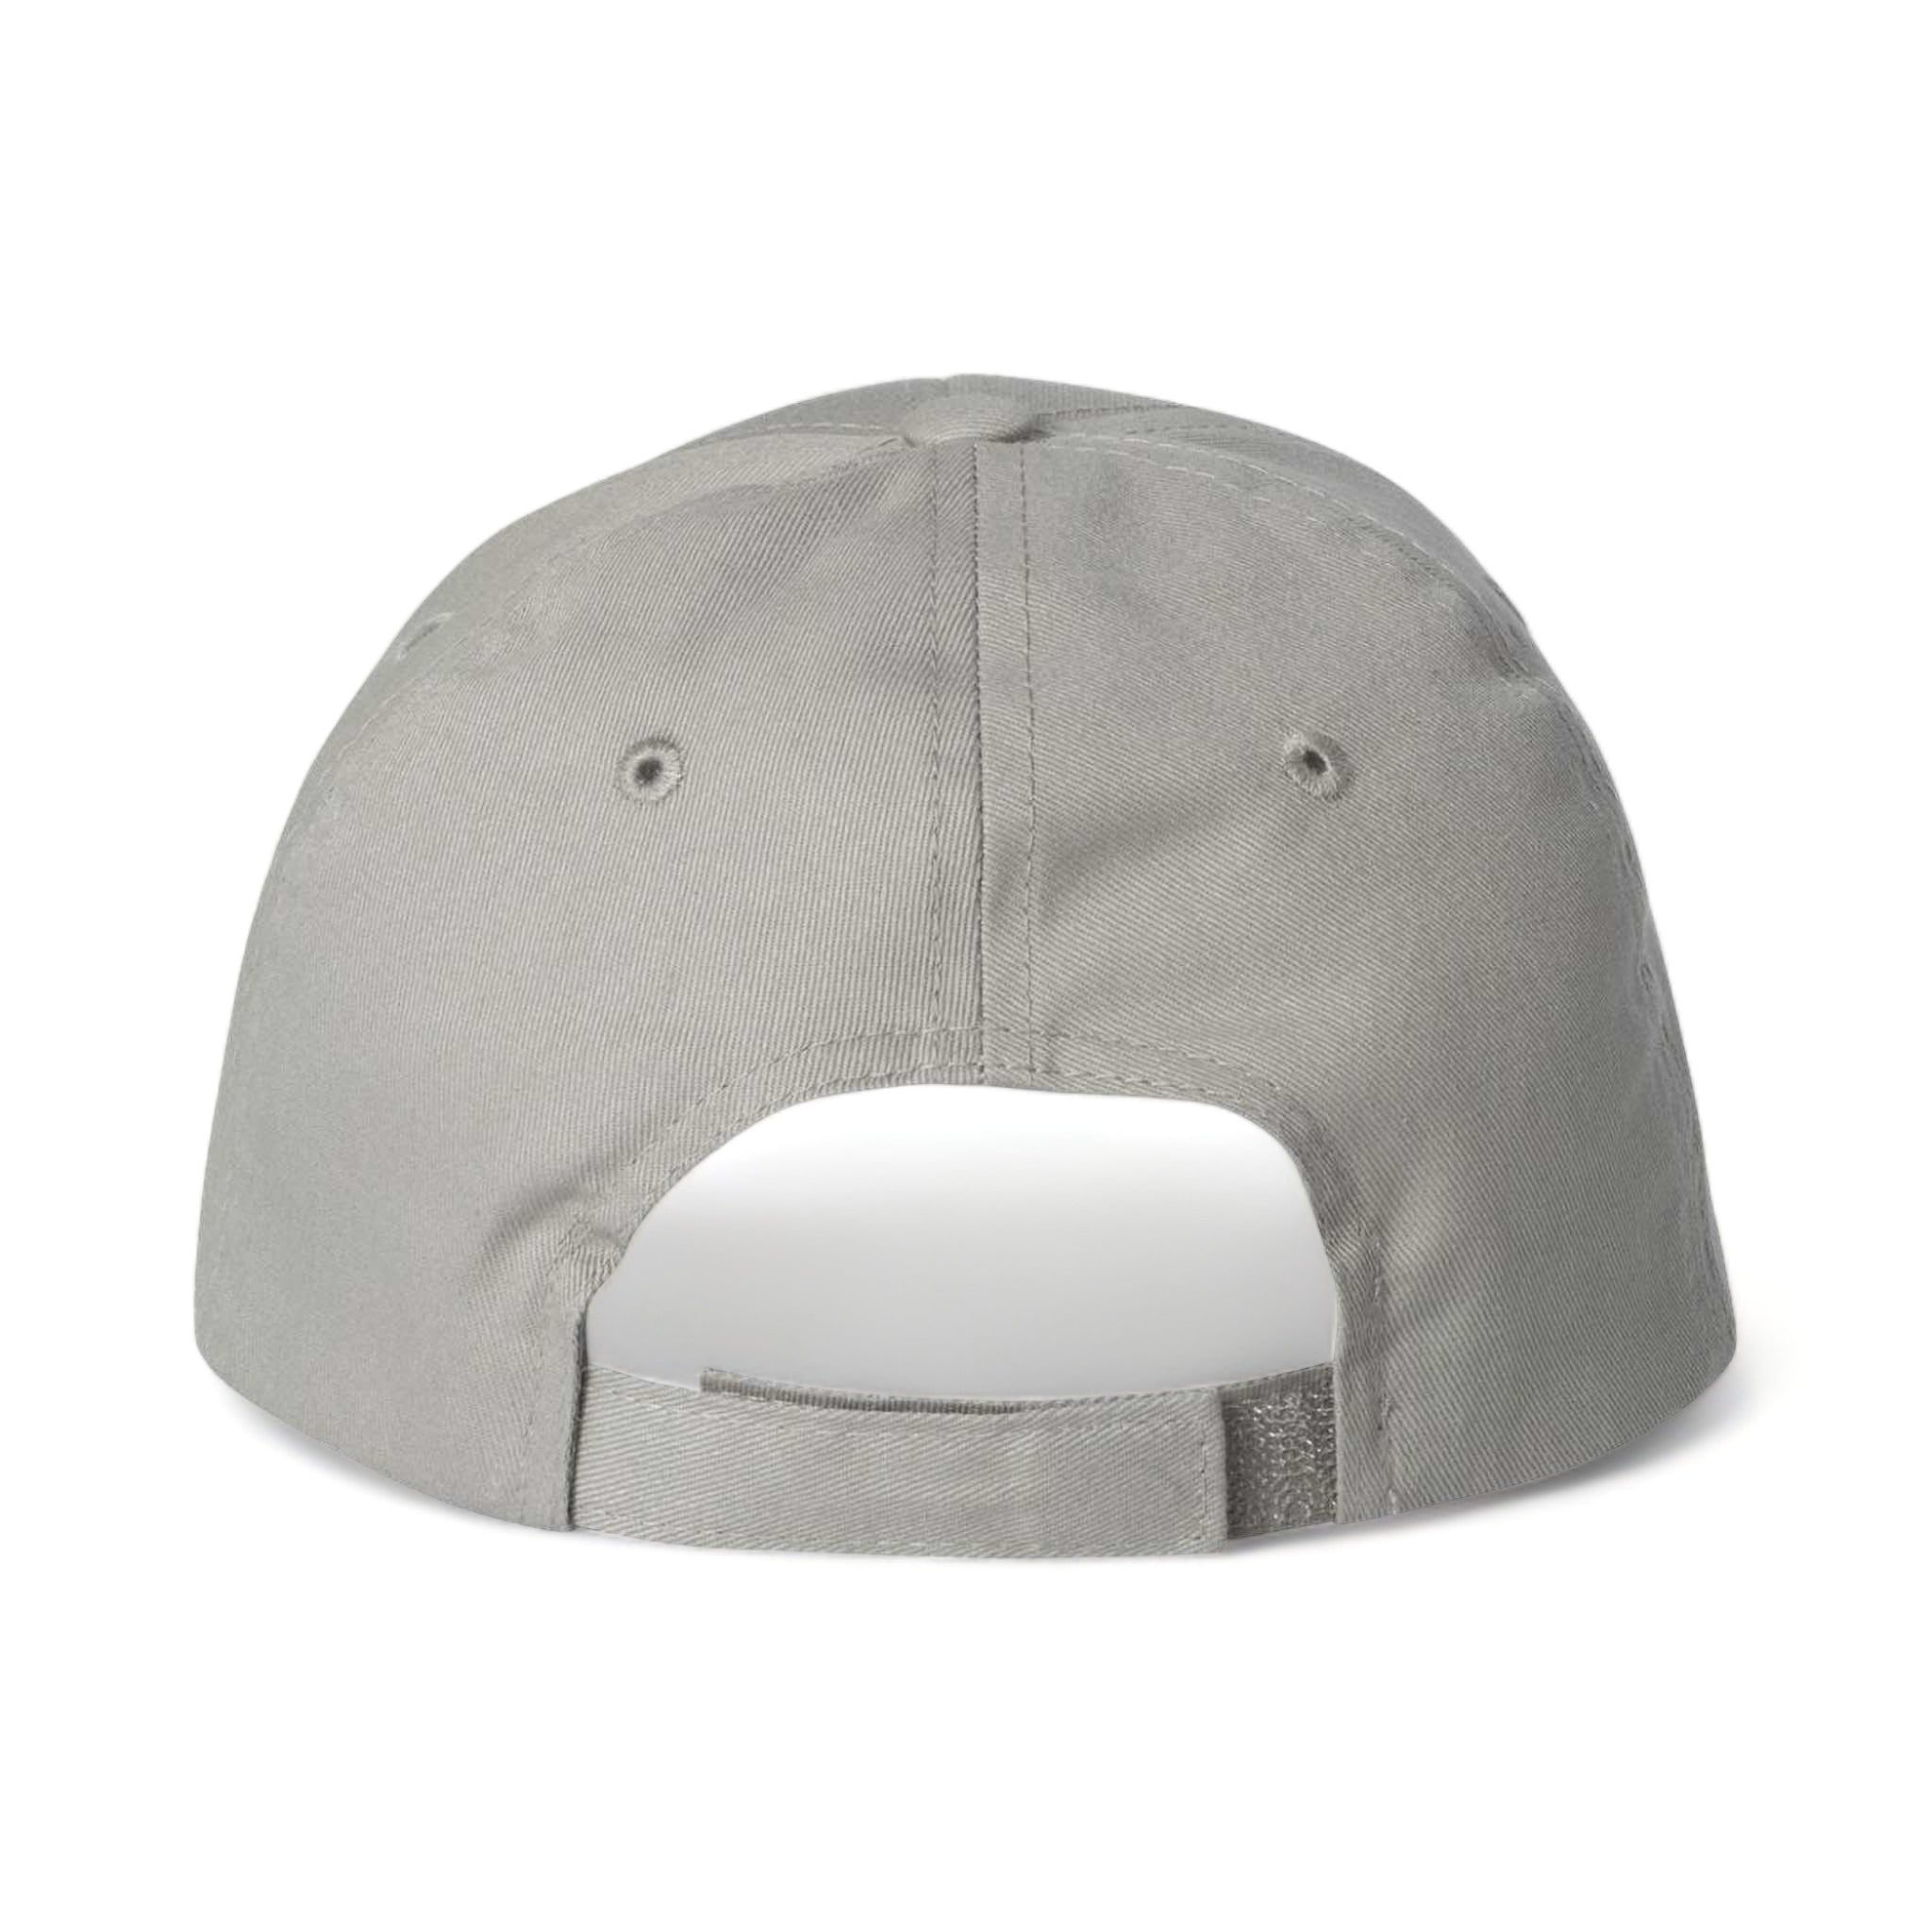 Back view of Sportsman 2260 custom hat in grey